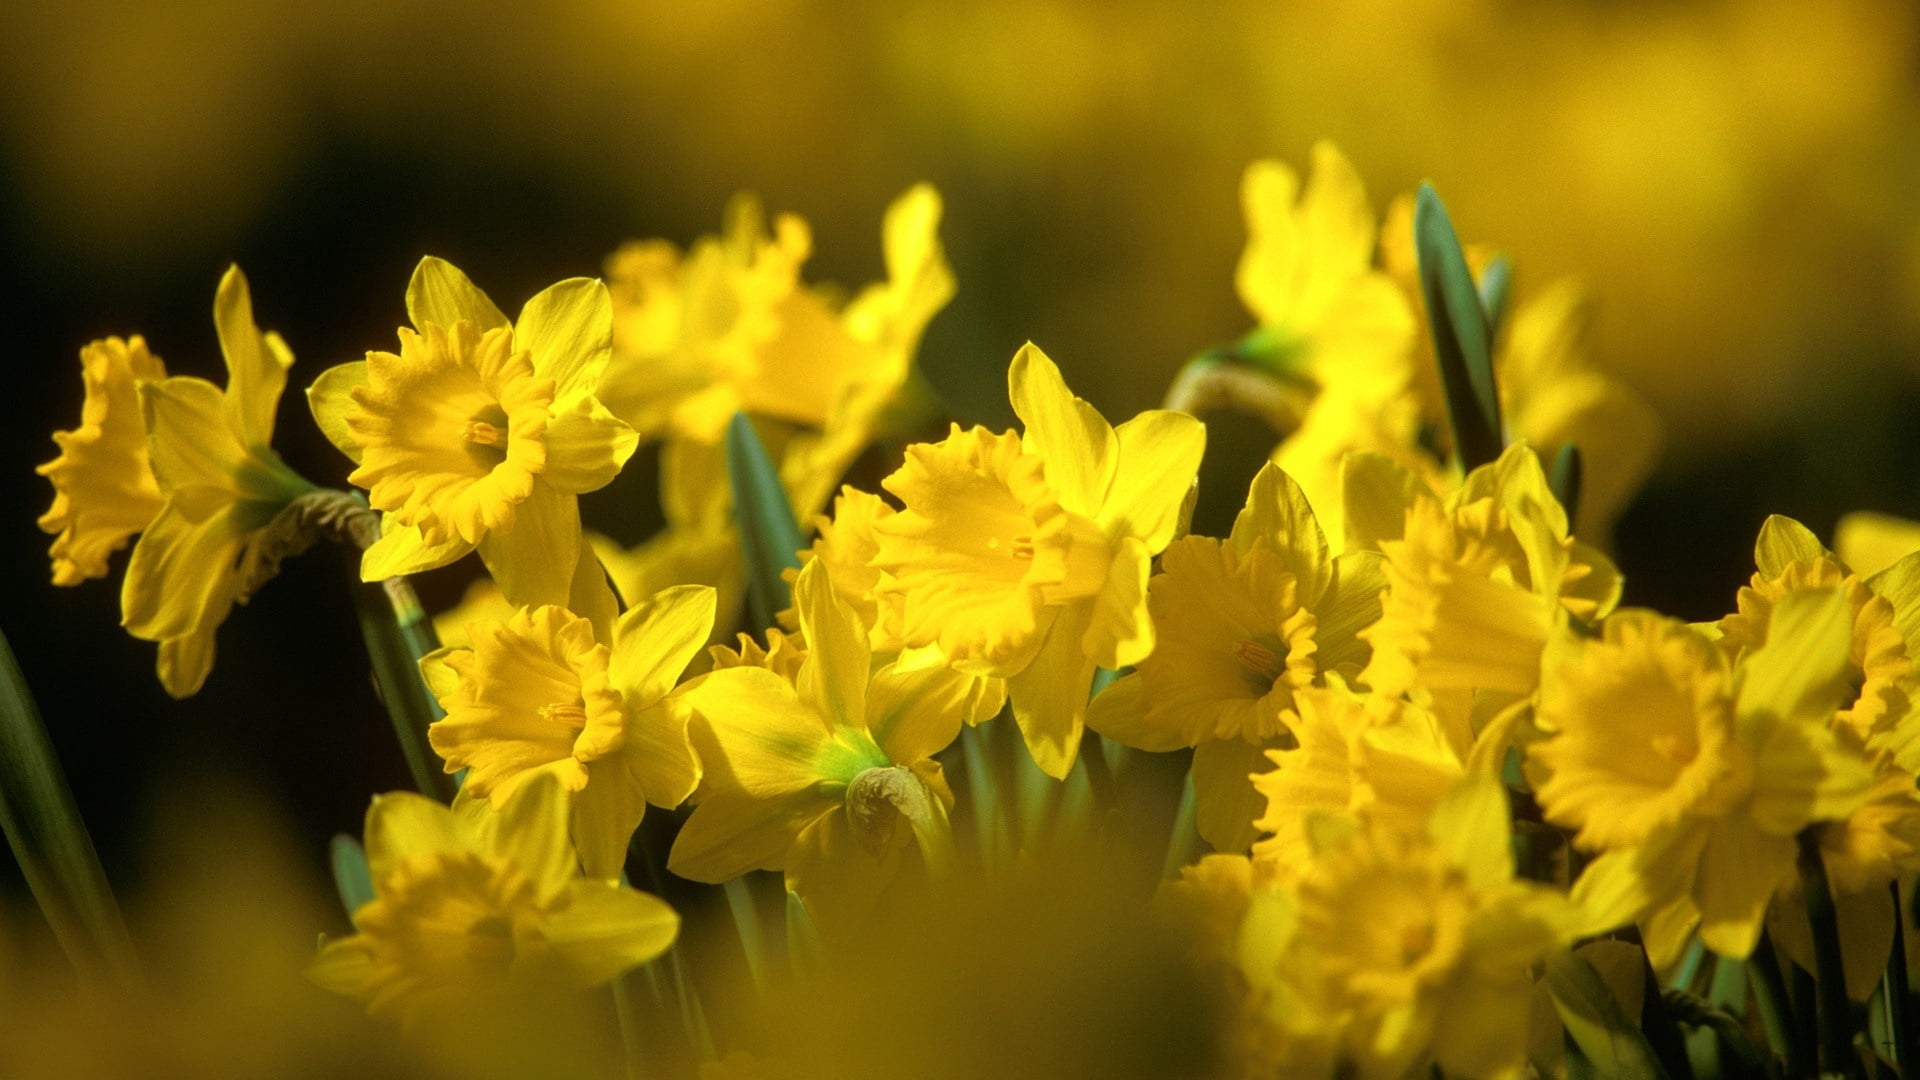 yellow daffodil flowers, daffodils, flowerbed, blurred, nature